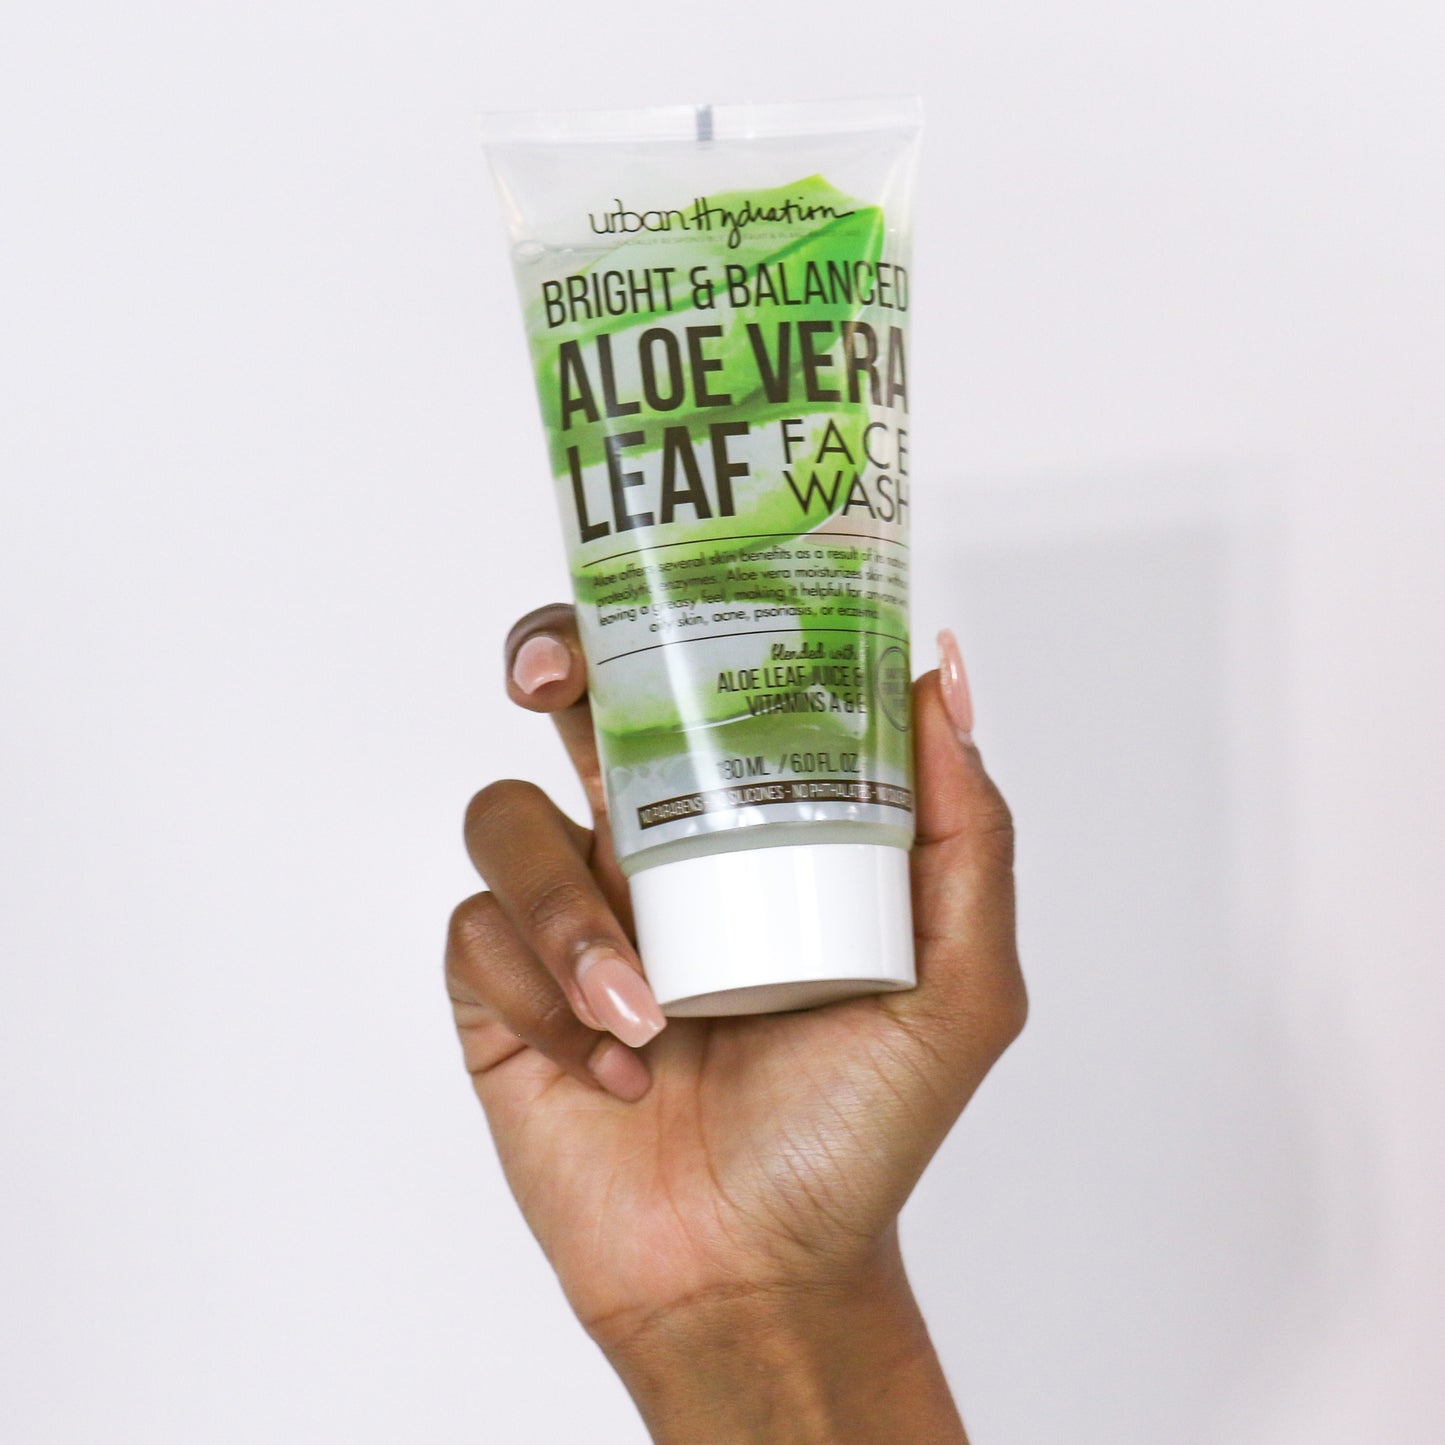 Bright & Balanced Aloe Vera Leaf Face Wash Hand Model